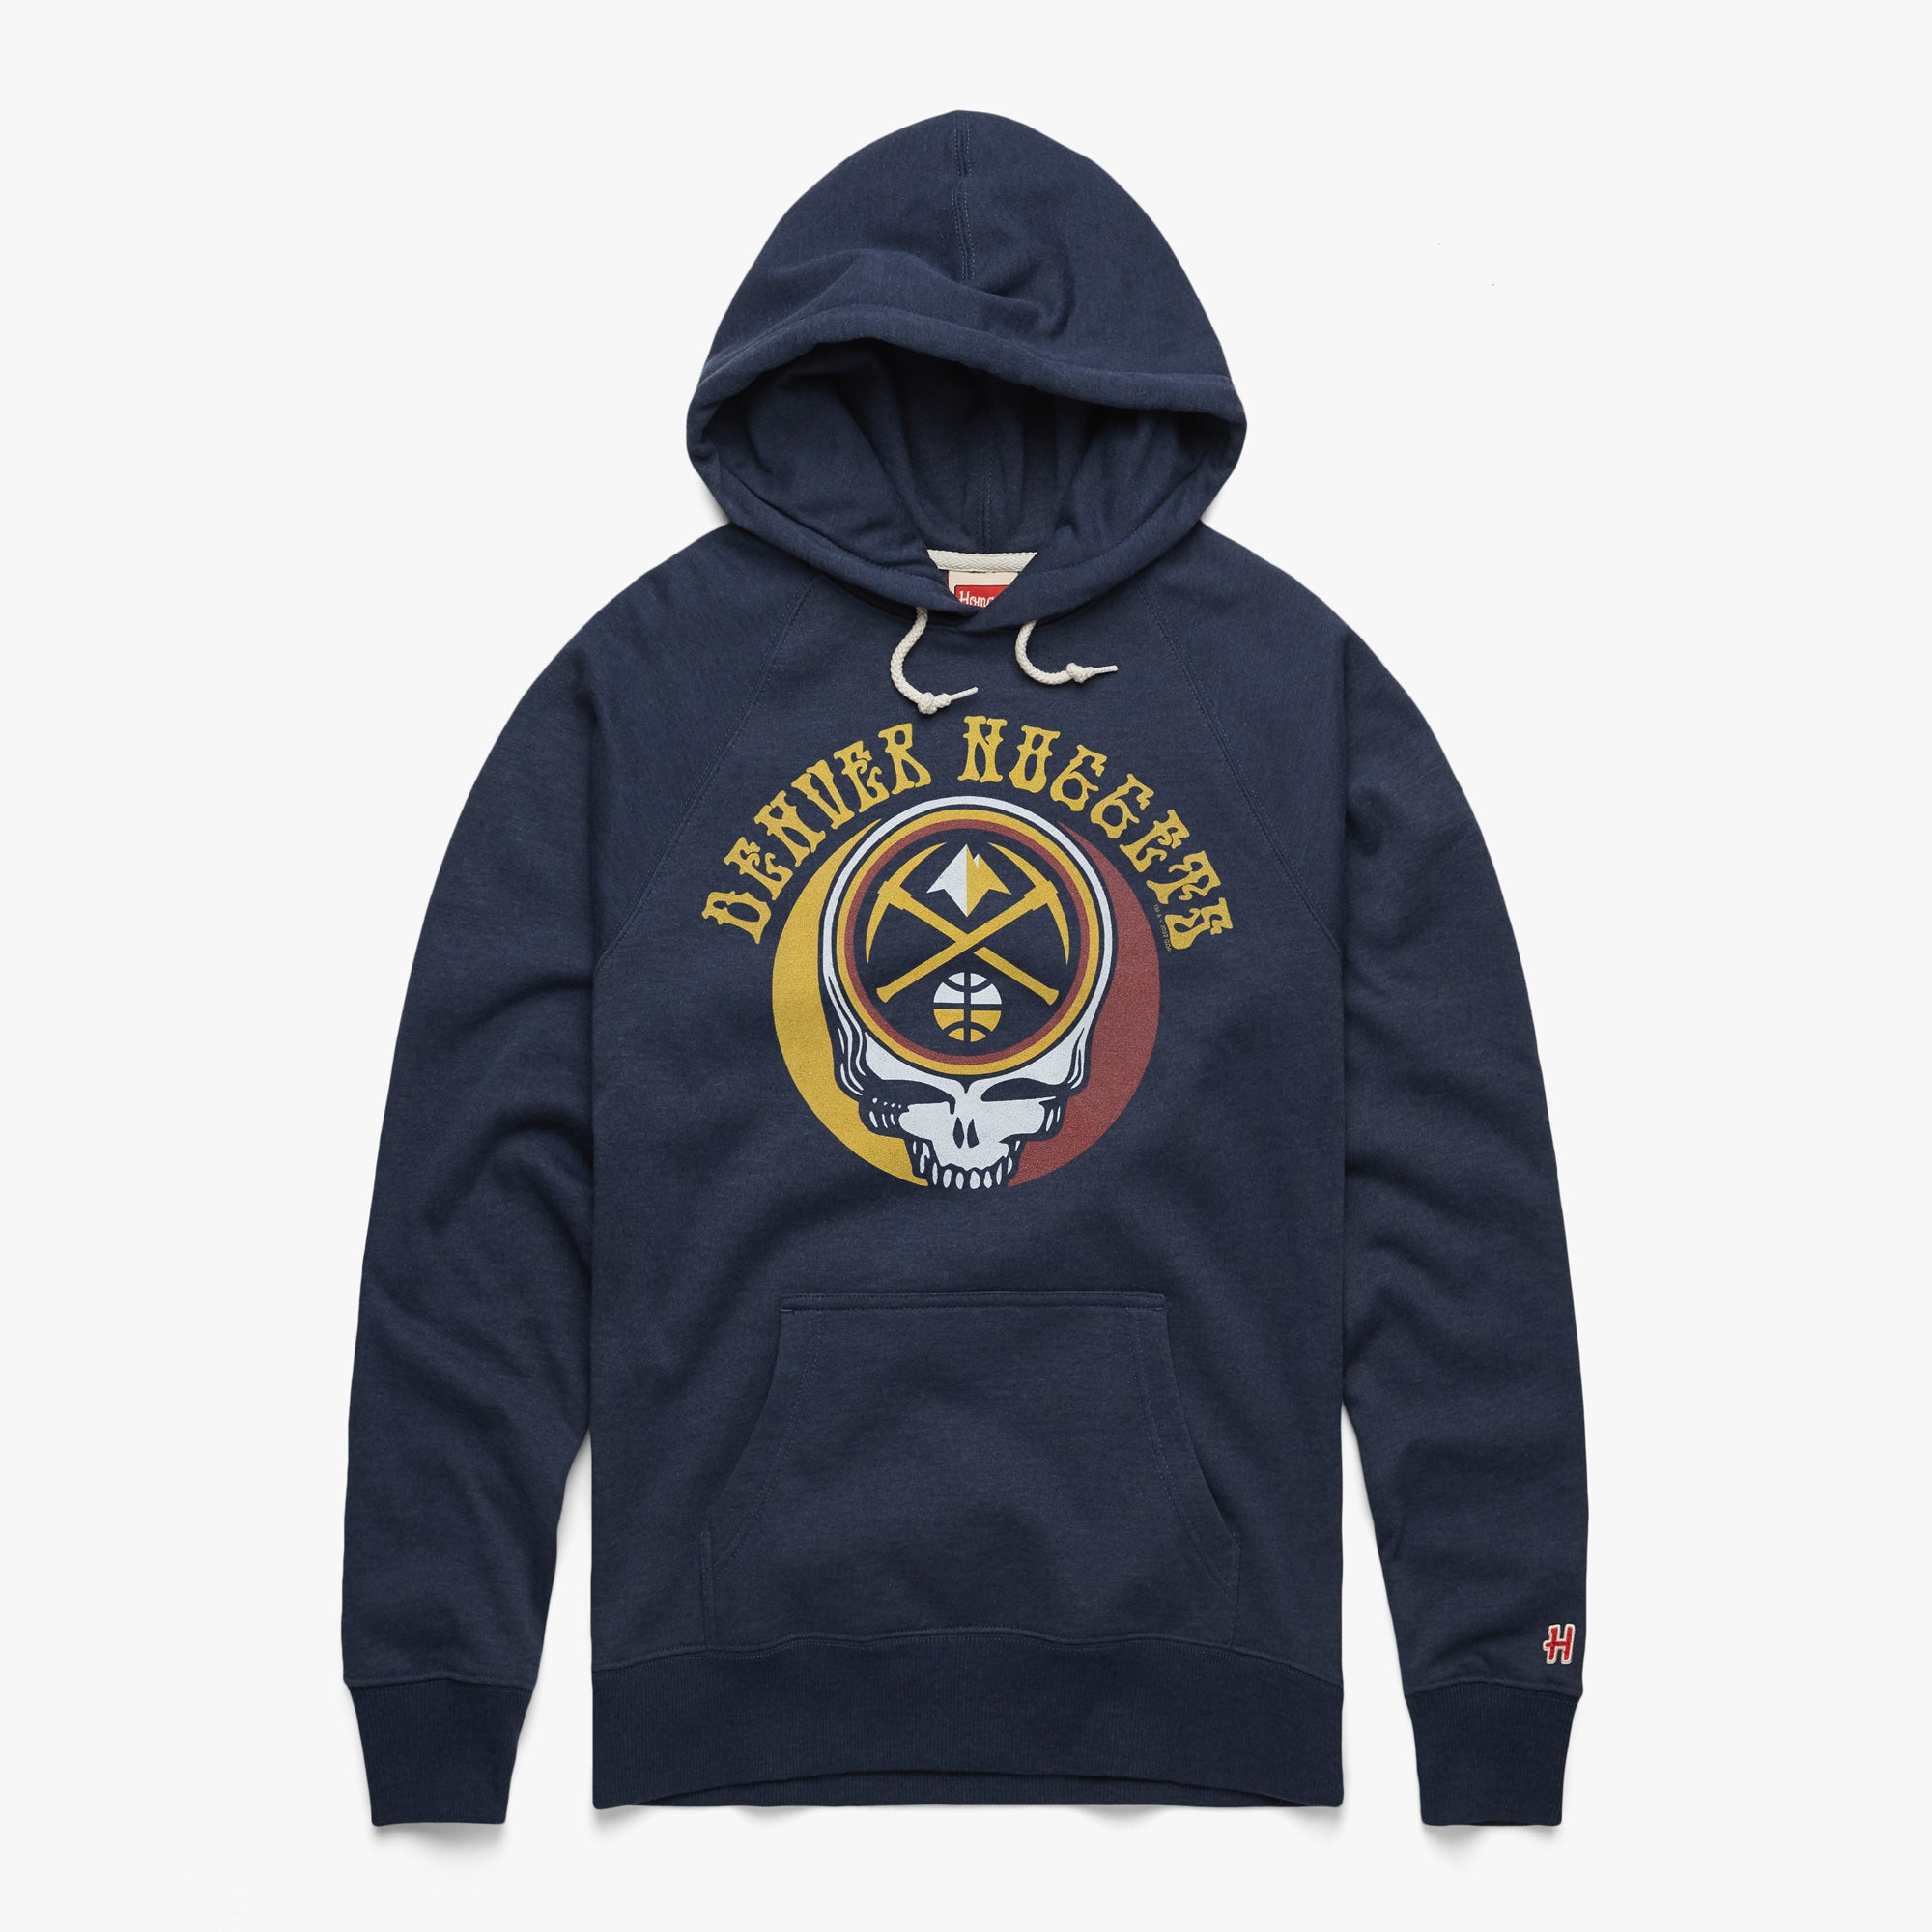 NBA X Grateful Dead X Chicago Bulls shirt, hoodie, sweatshirt for men and  women